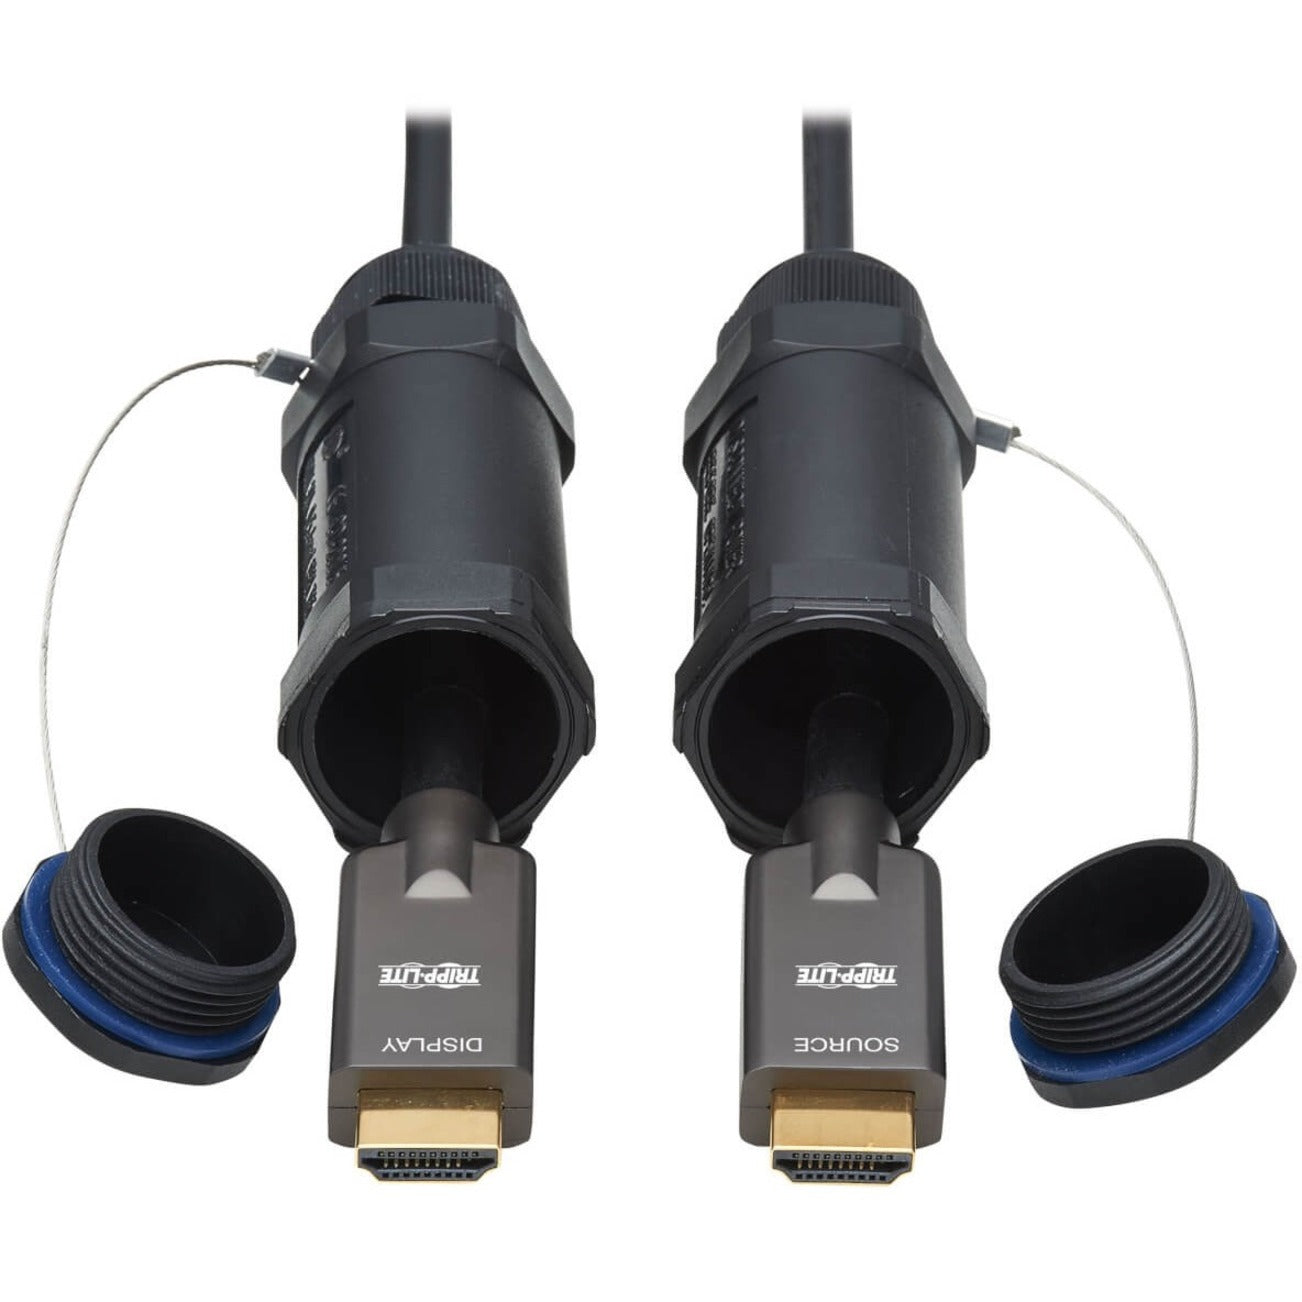 Tripp Lite P568FA-70M-WR Fiber Optic Audio/Video Cable, 229.66 ft, Armored, 18 Gbit/s, 3840 x 2160, HDMI 2.0